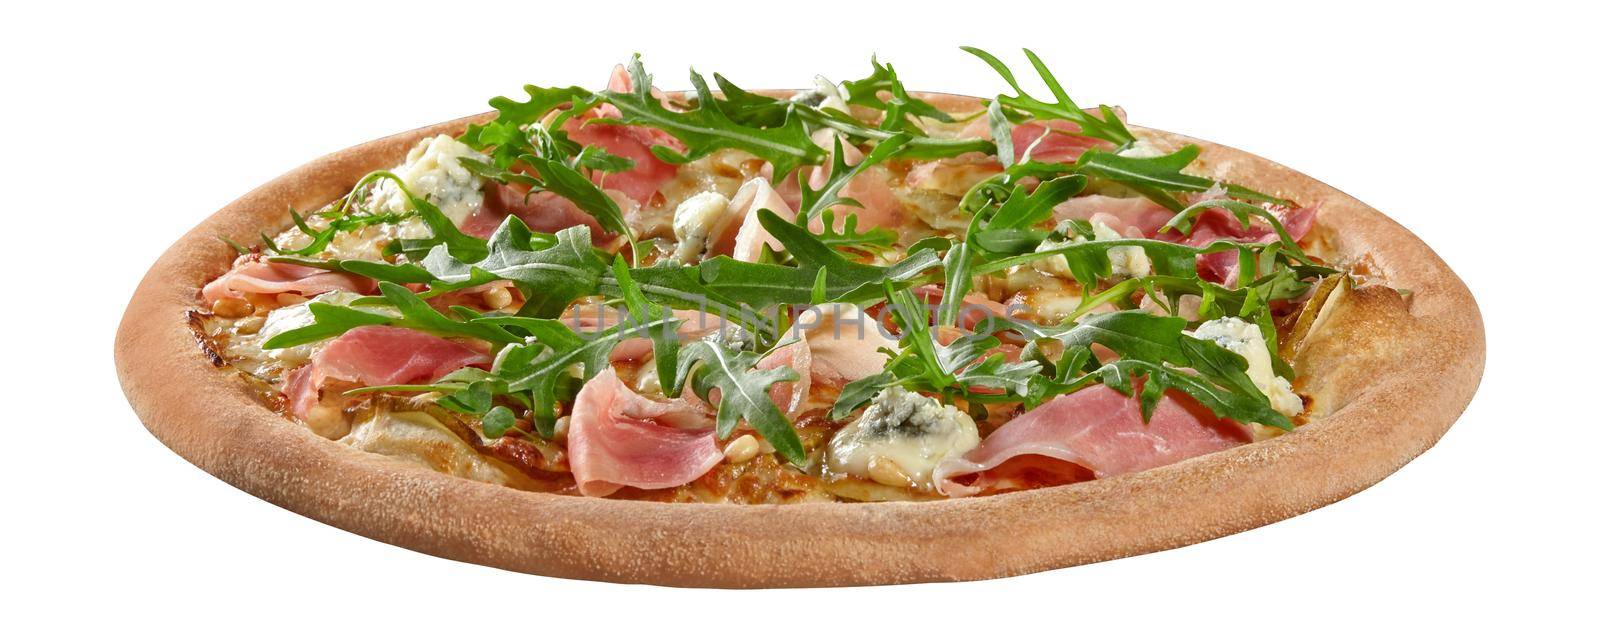 Pinoli pizza with cheese and cream sauce, mozzarella, prosciutto, gorgonzola, pears, pine nuts and arugula by nazarovsergey